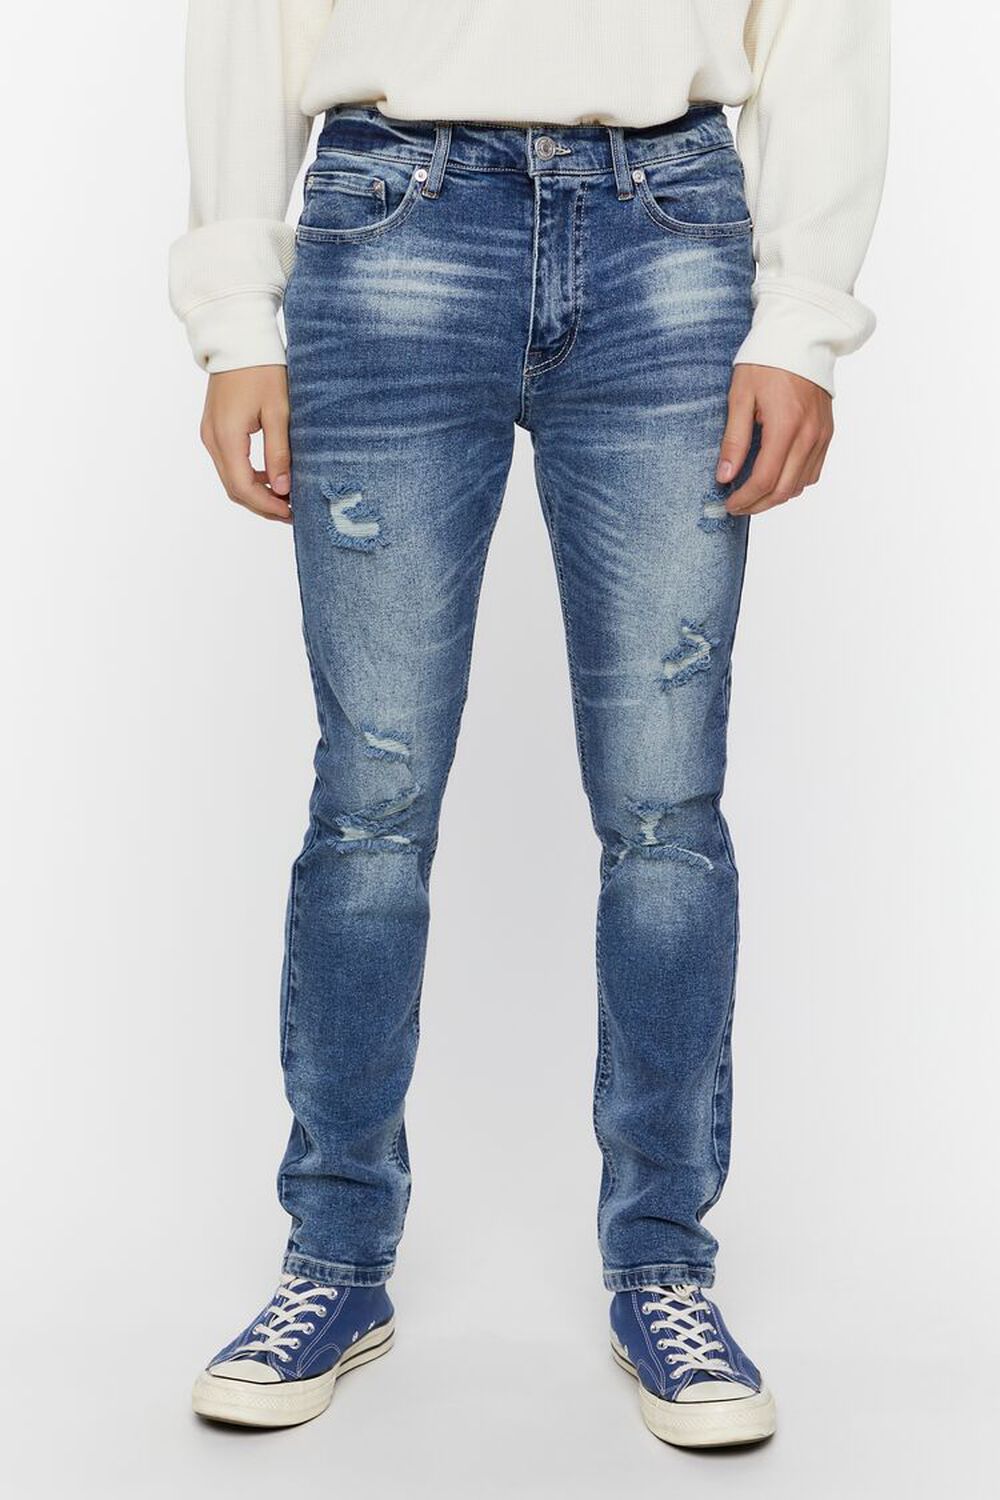 DARK DENIM Distressed Slim-Fit Jeans, image 2